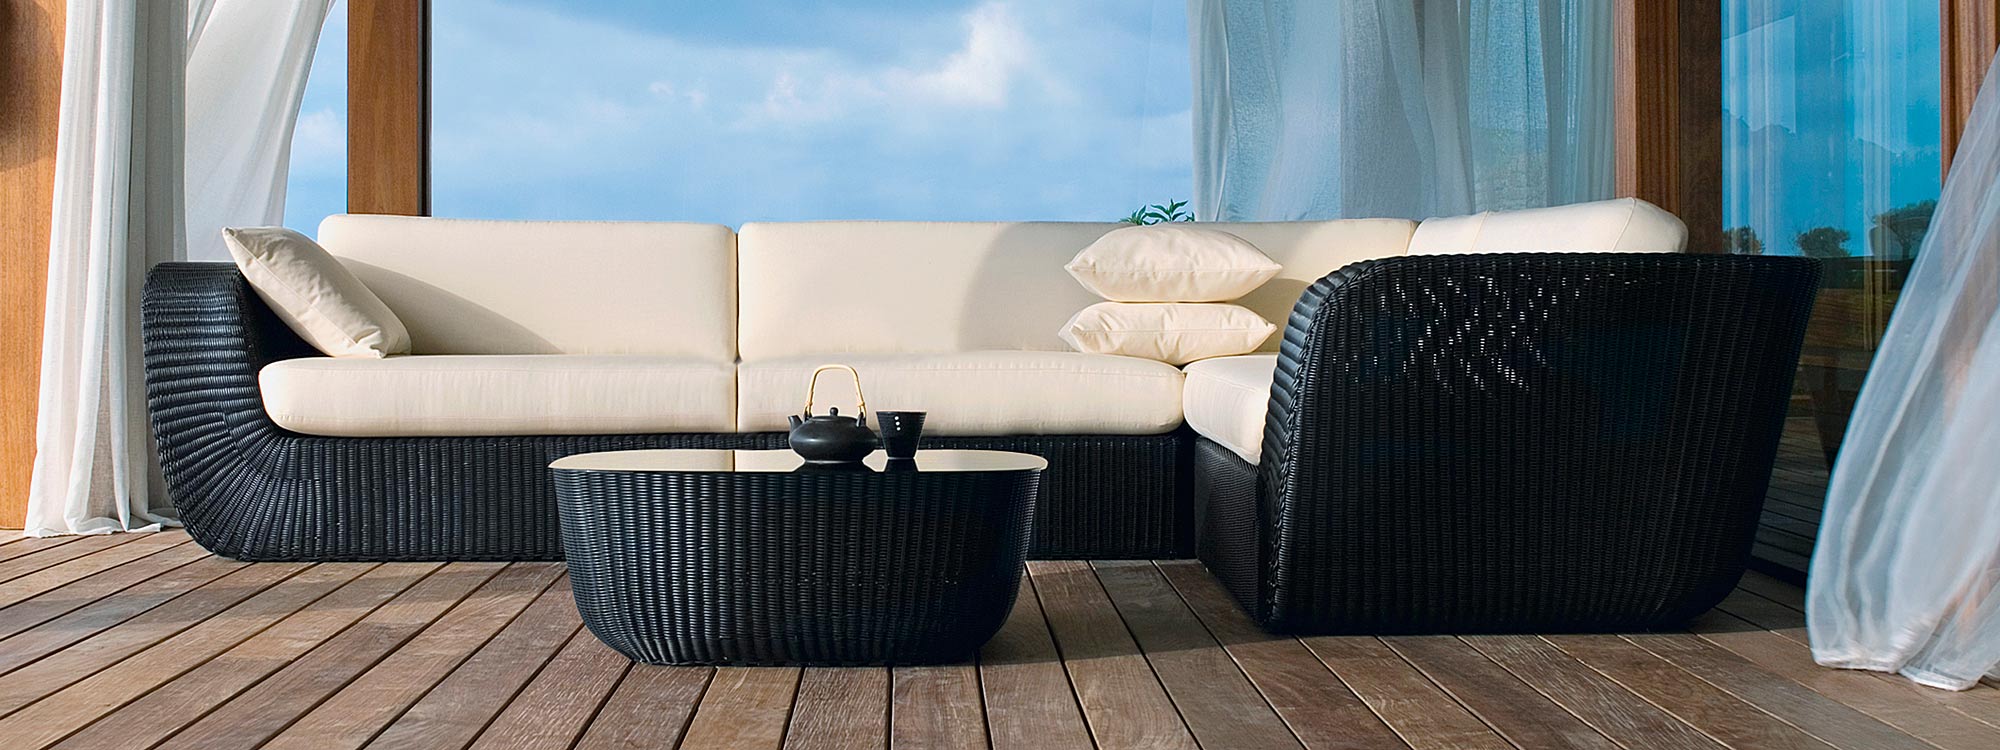 Savannah modular rattan garden sofa is an all-weather woven outdoor sofa in high quality garden furniture materials by Cane-line modern garden furniture.